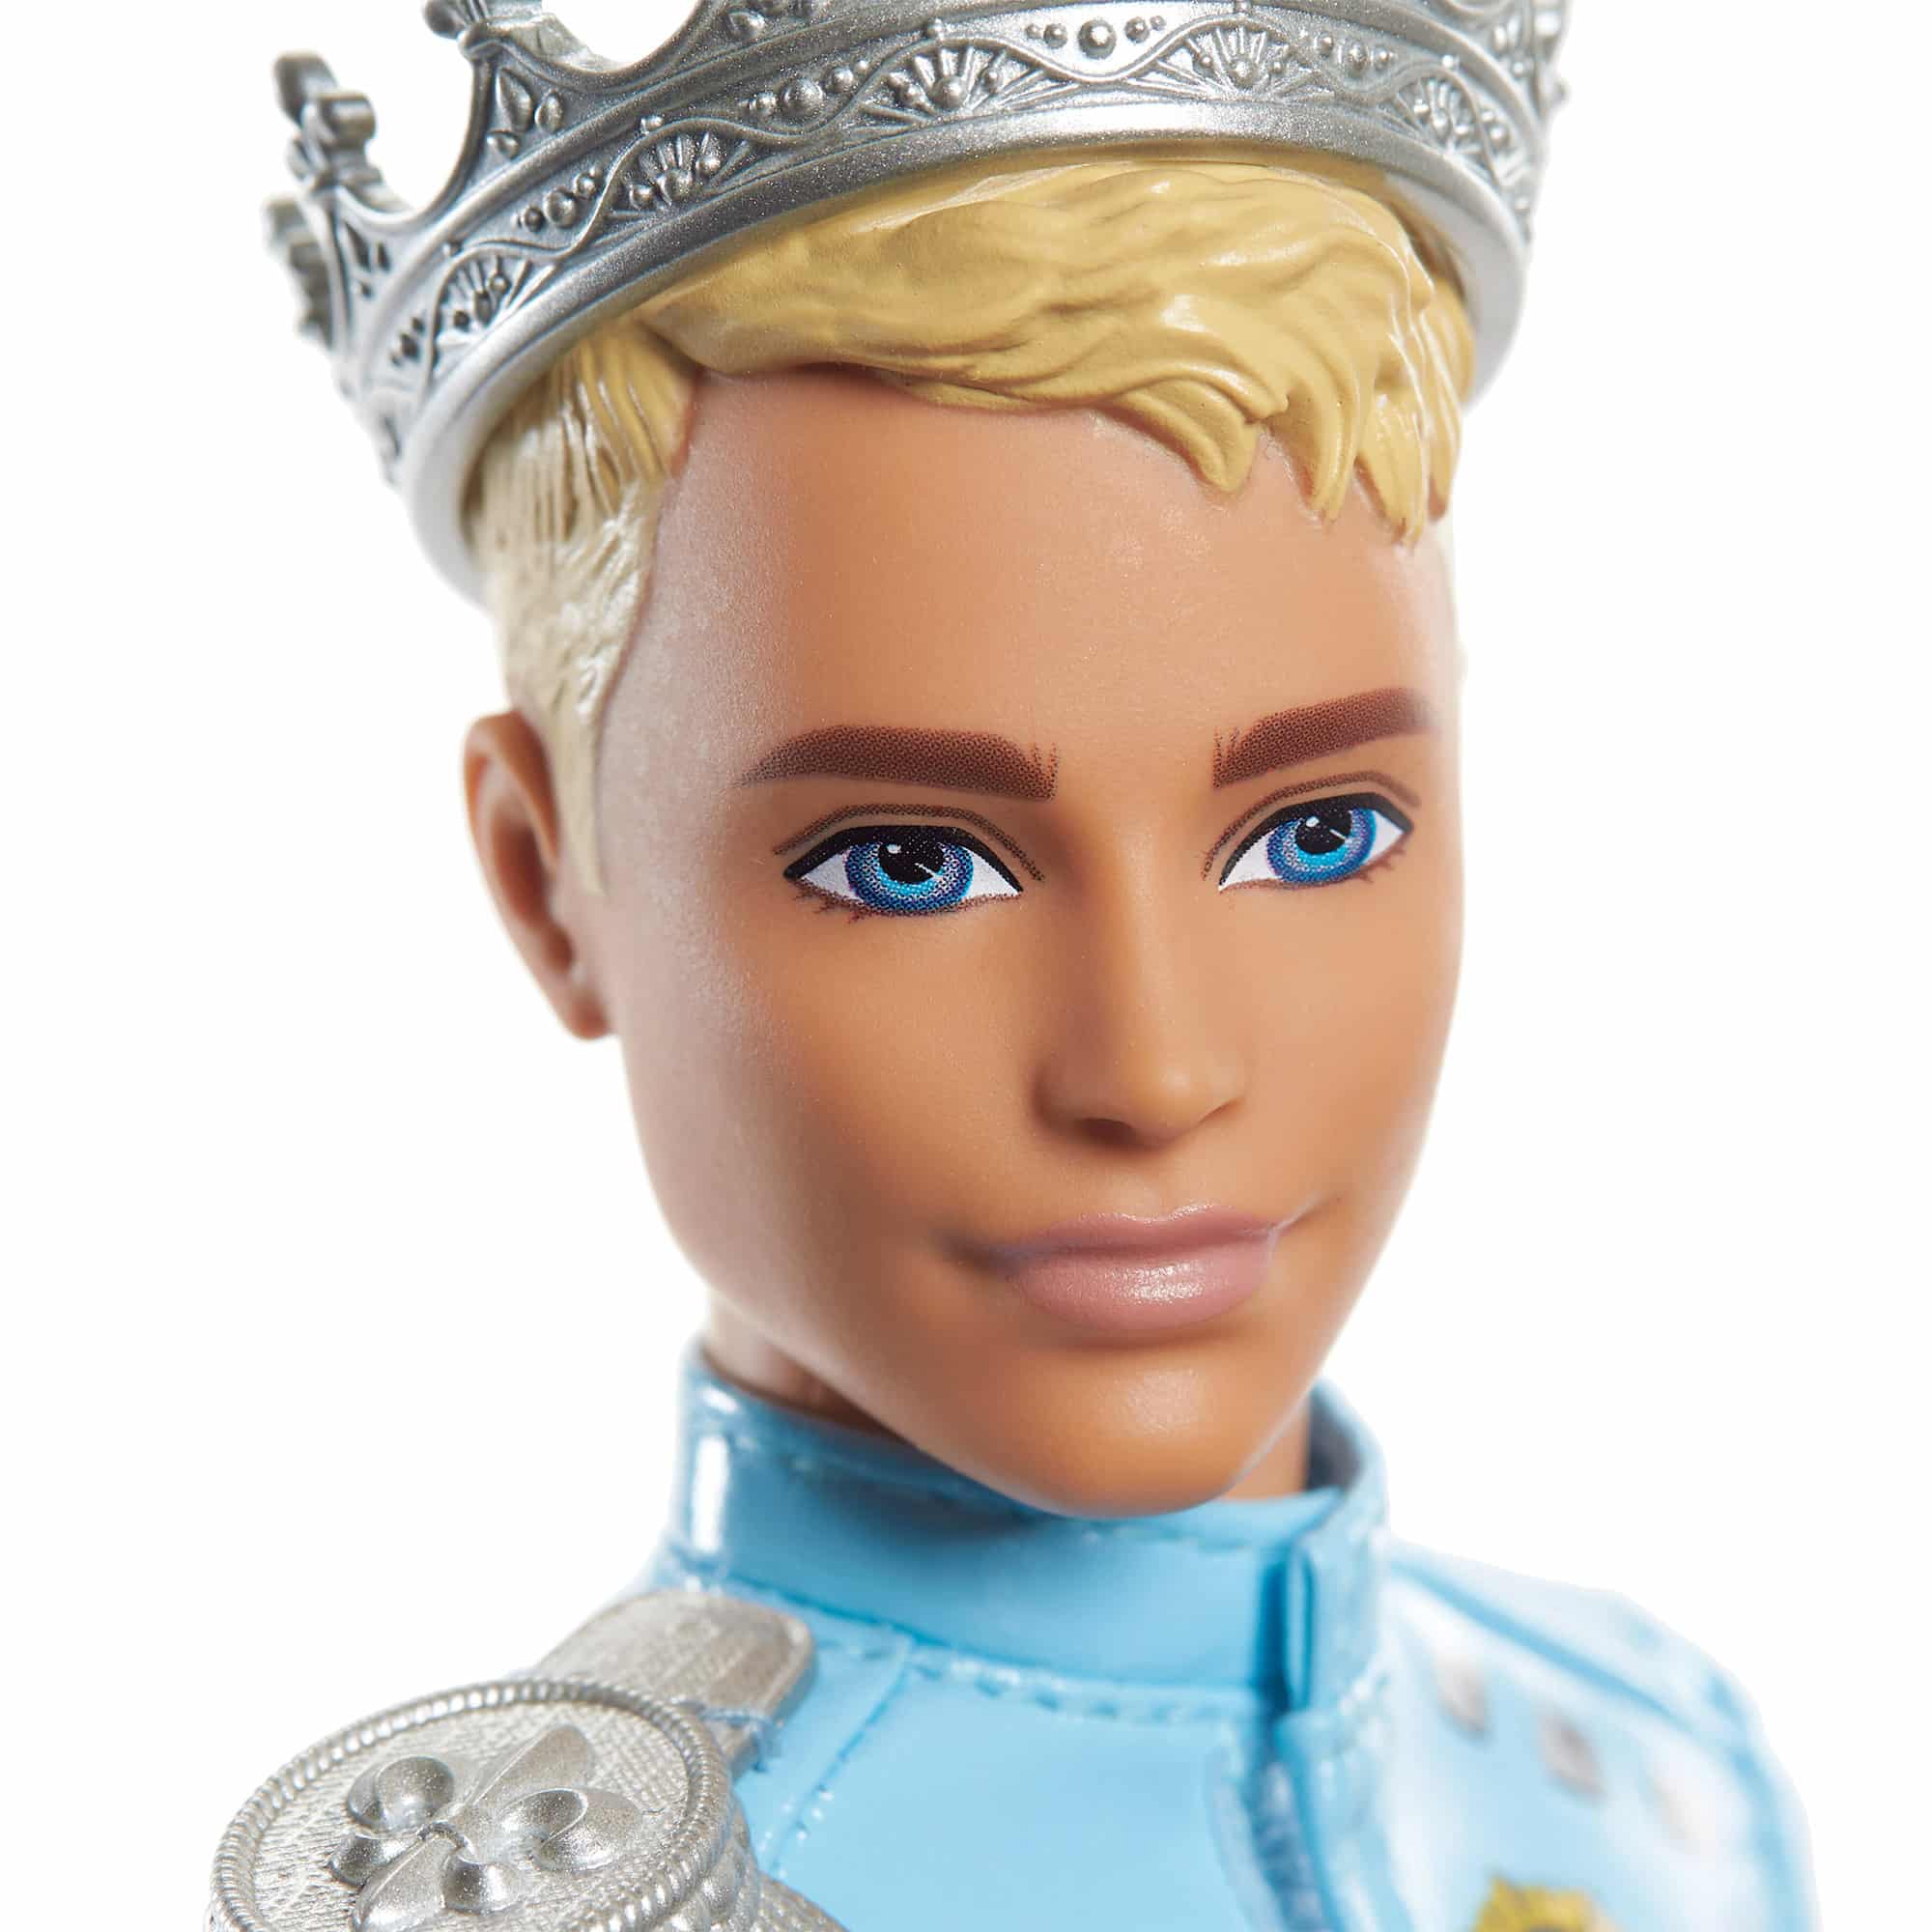 Barbie - Princess Adventure - Prince Ken Doll